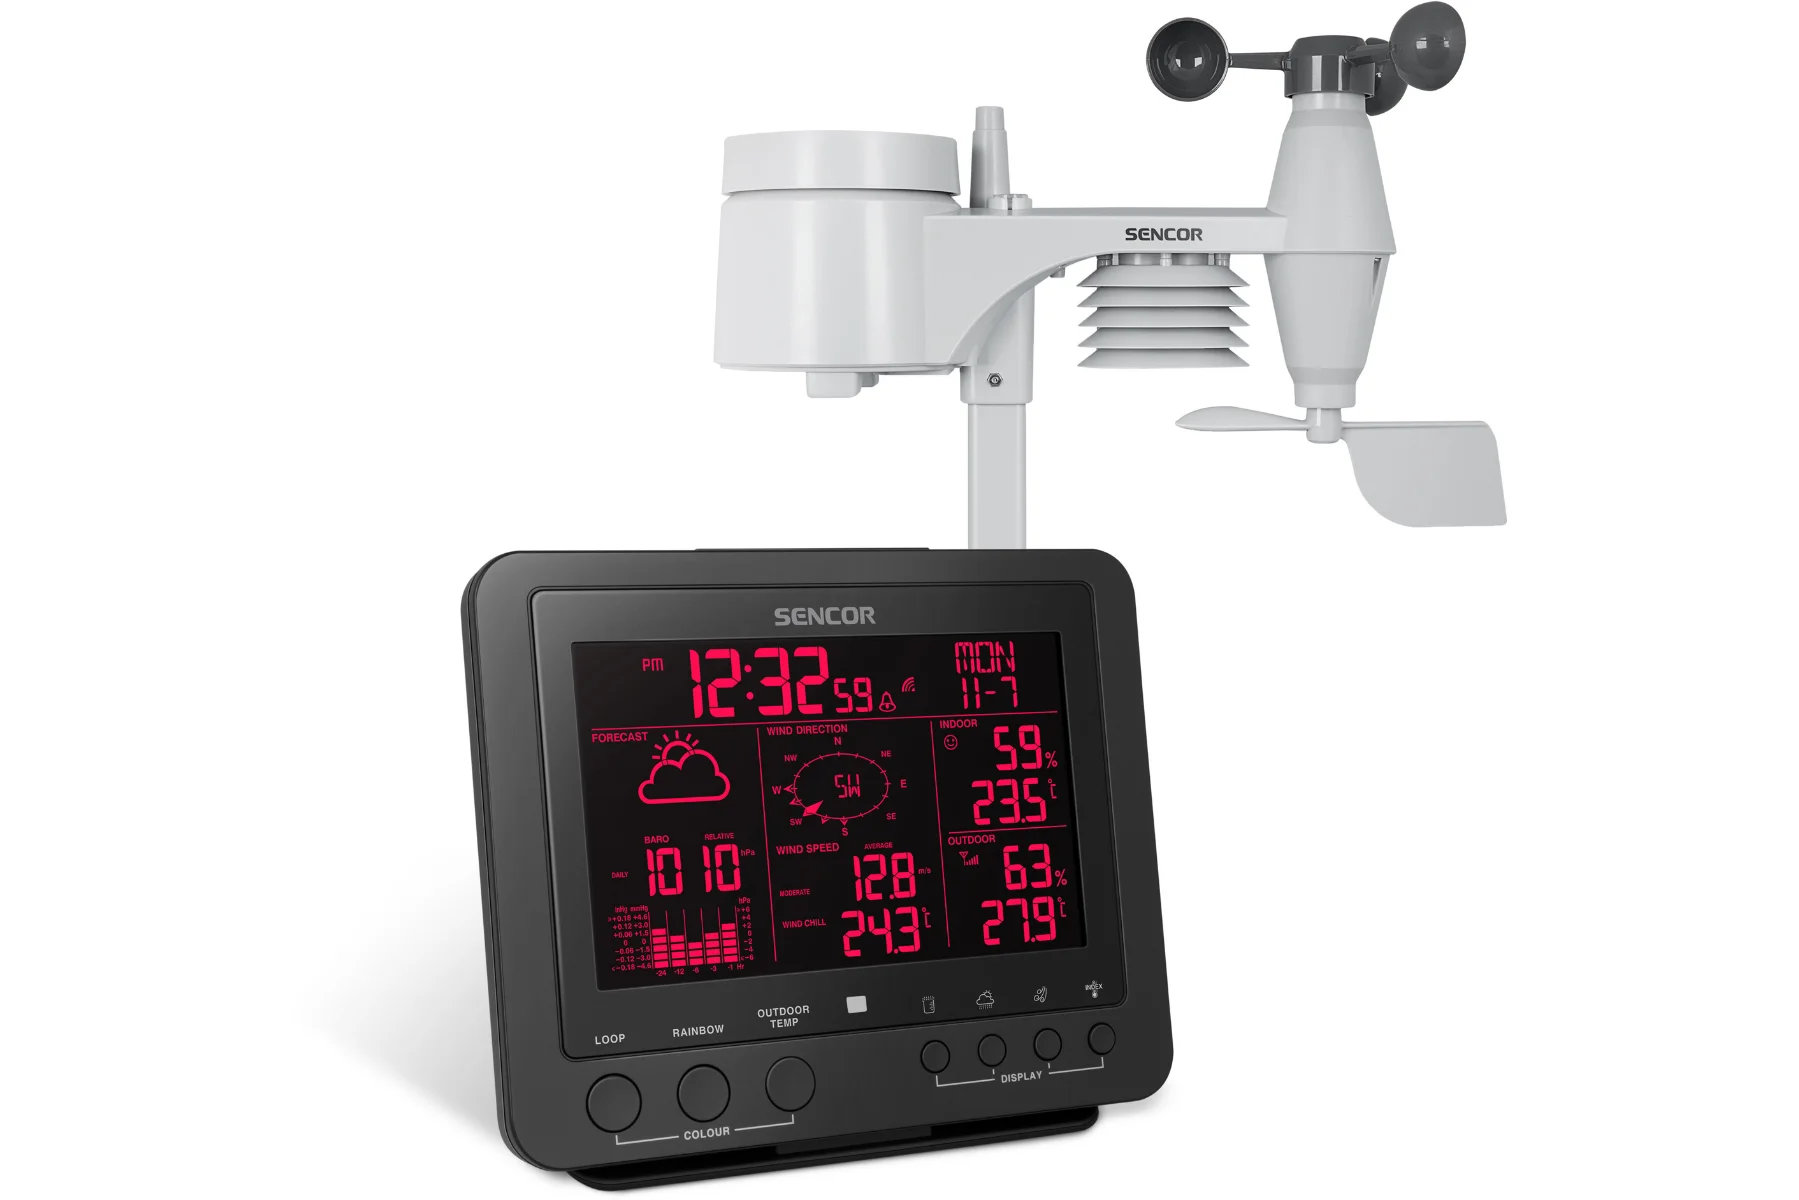 Profesionálna meteorologická stanica Sencor SWS 9700 merania funkcie